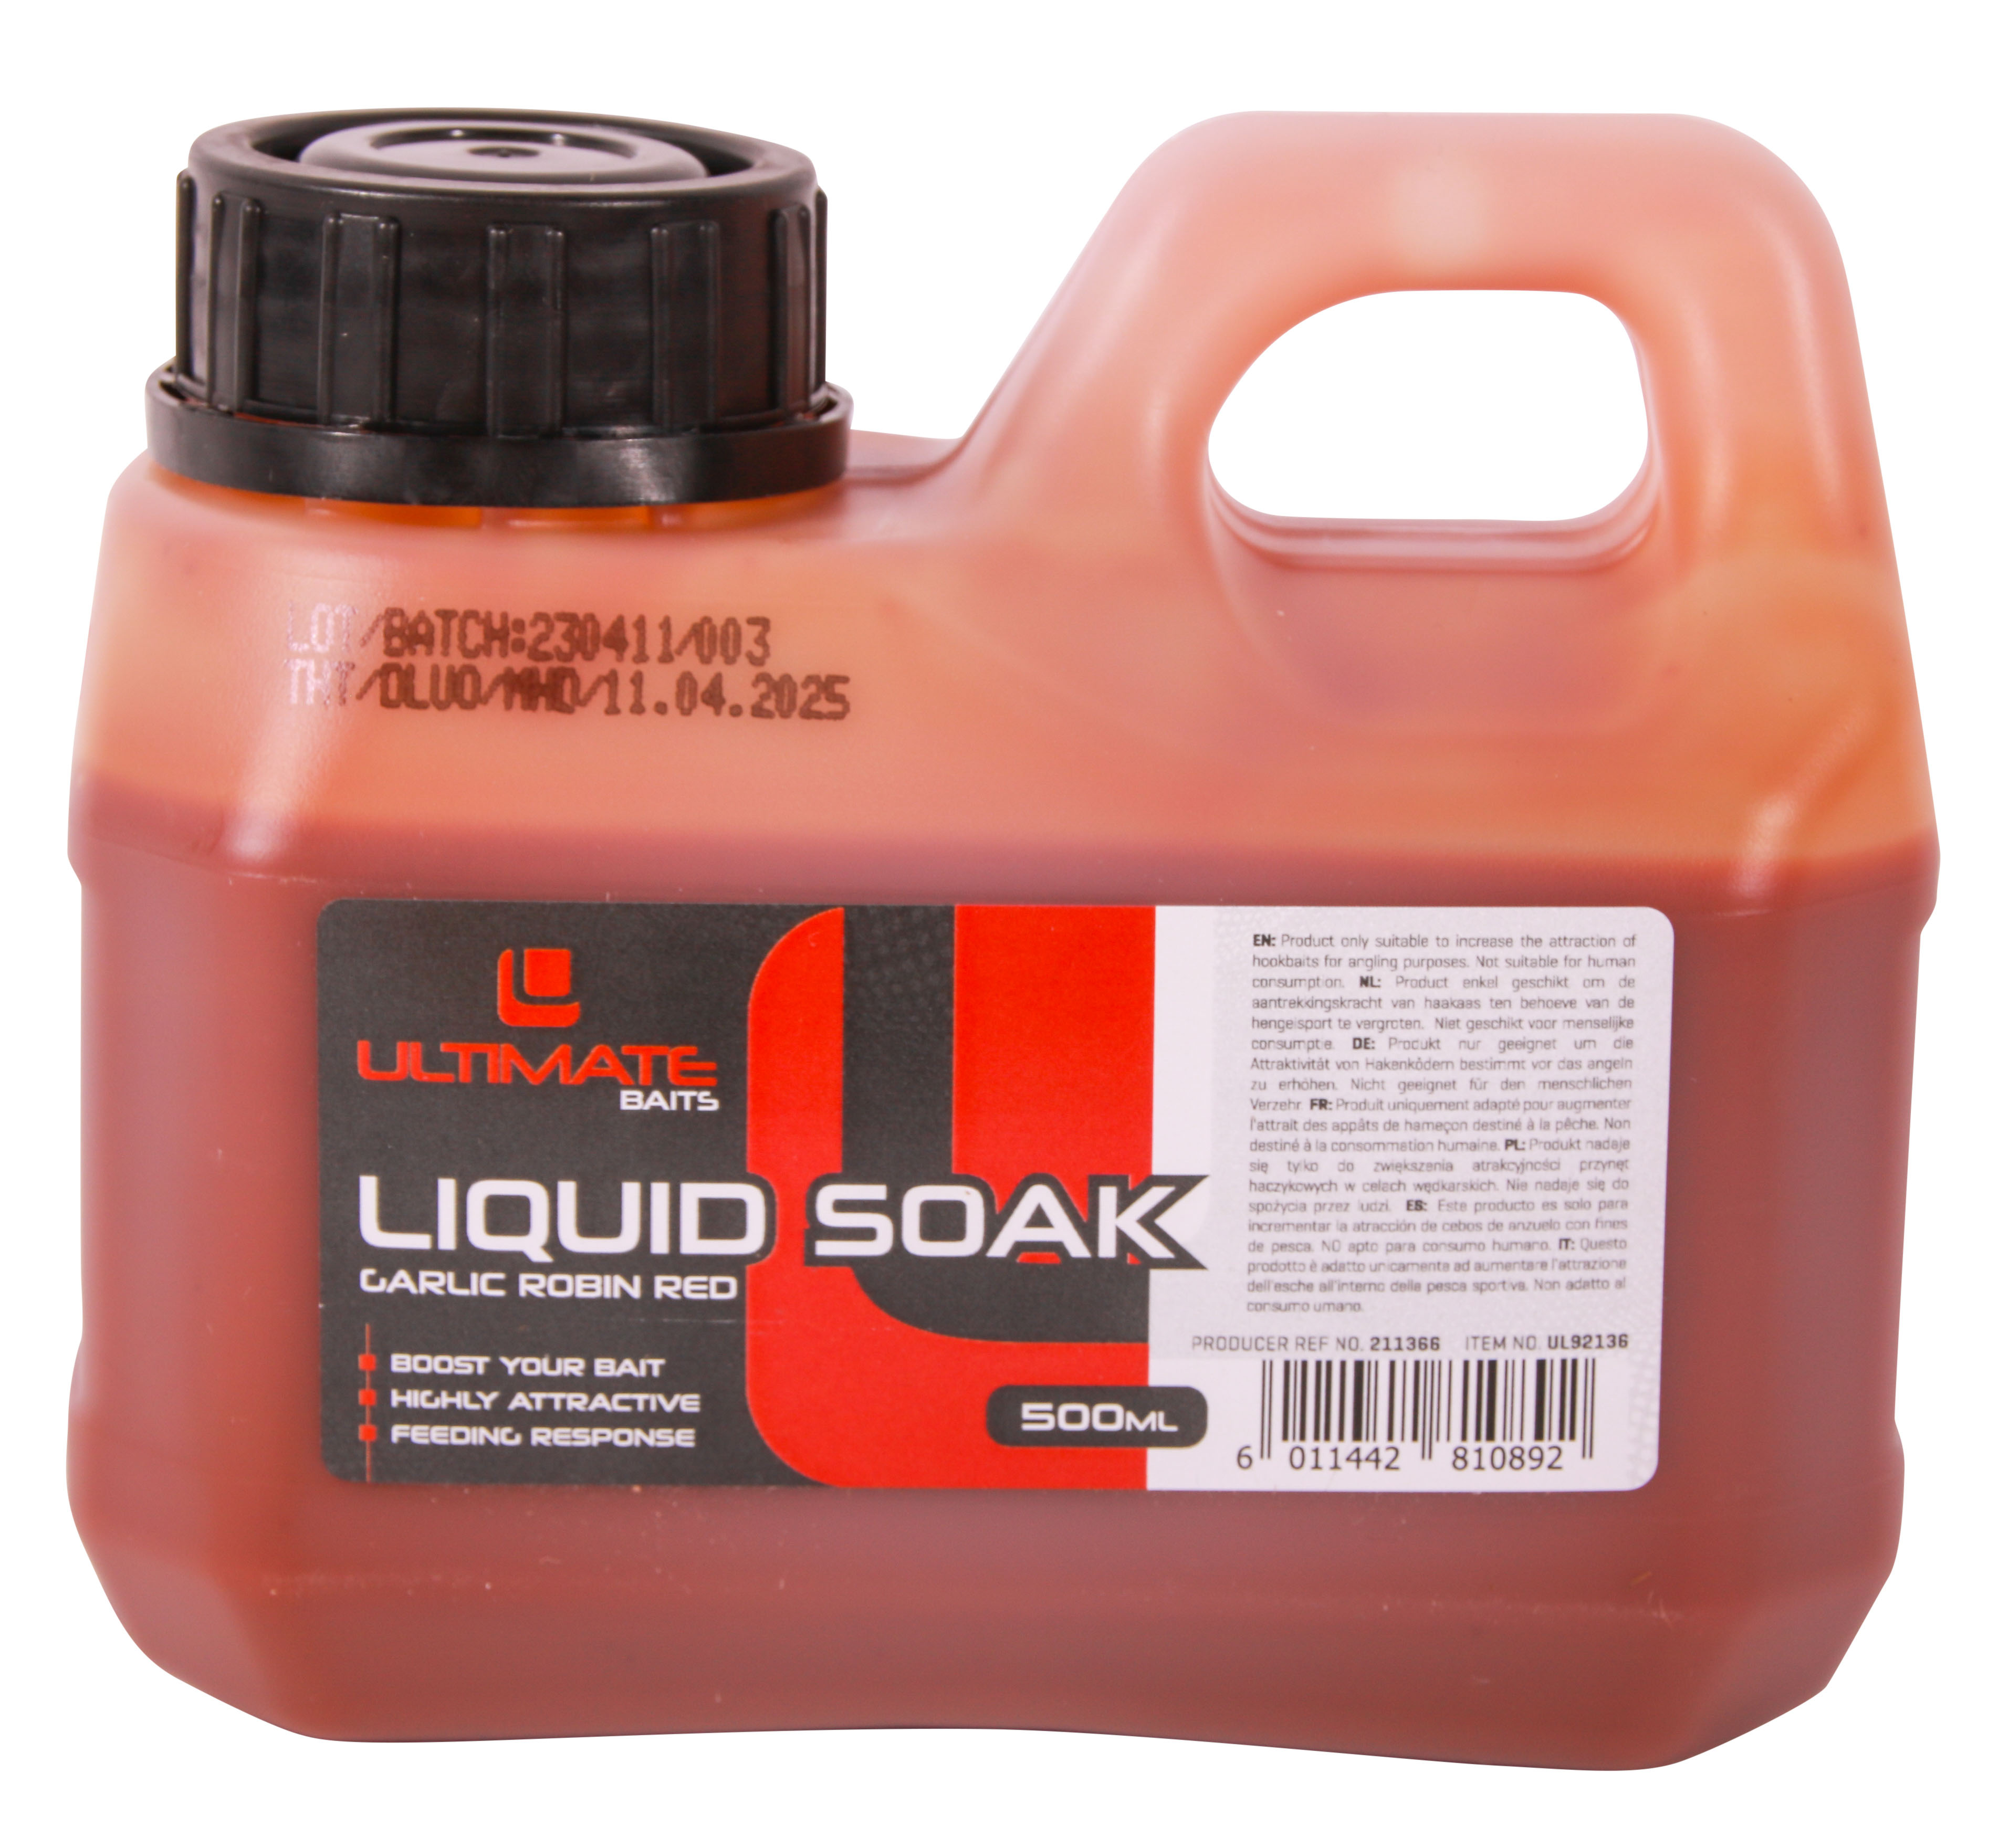 Ultimate Baits Liquid Soak 500ml - Garlic Robin Red